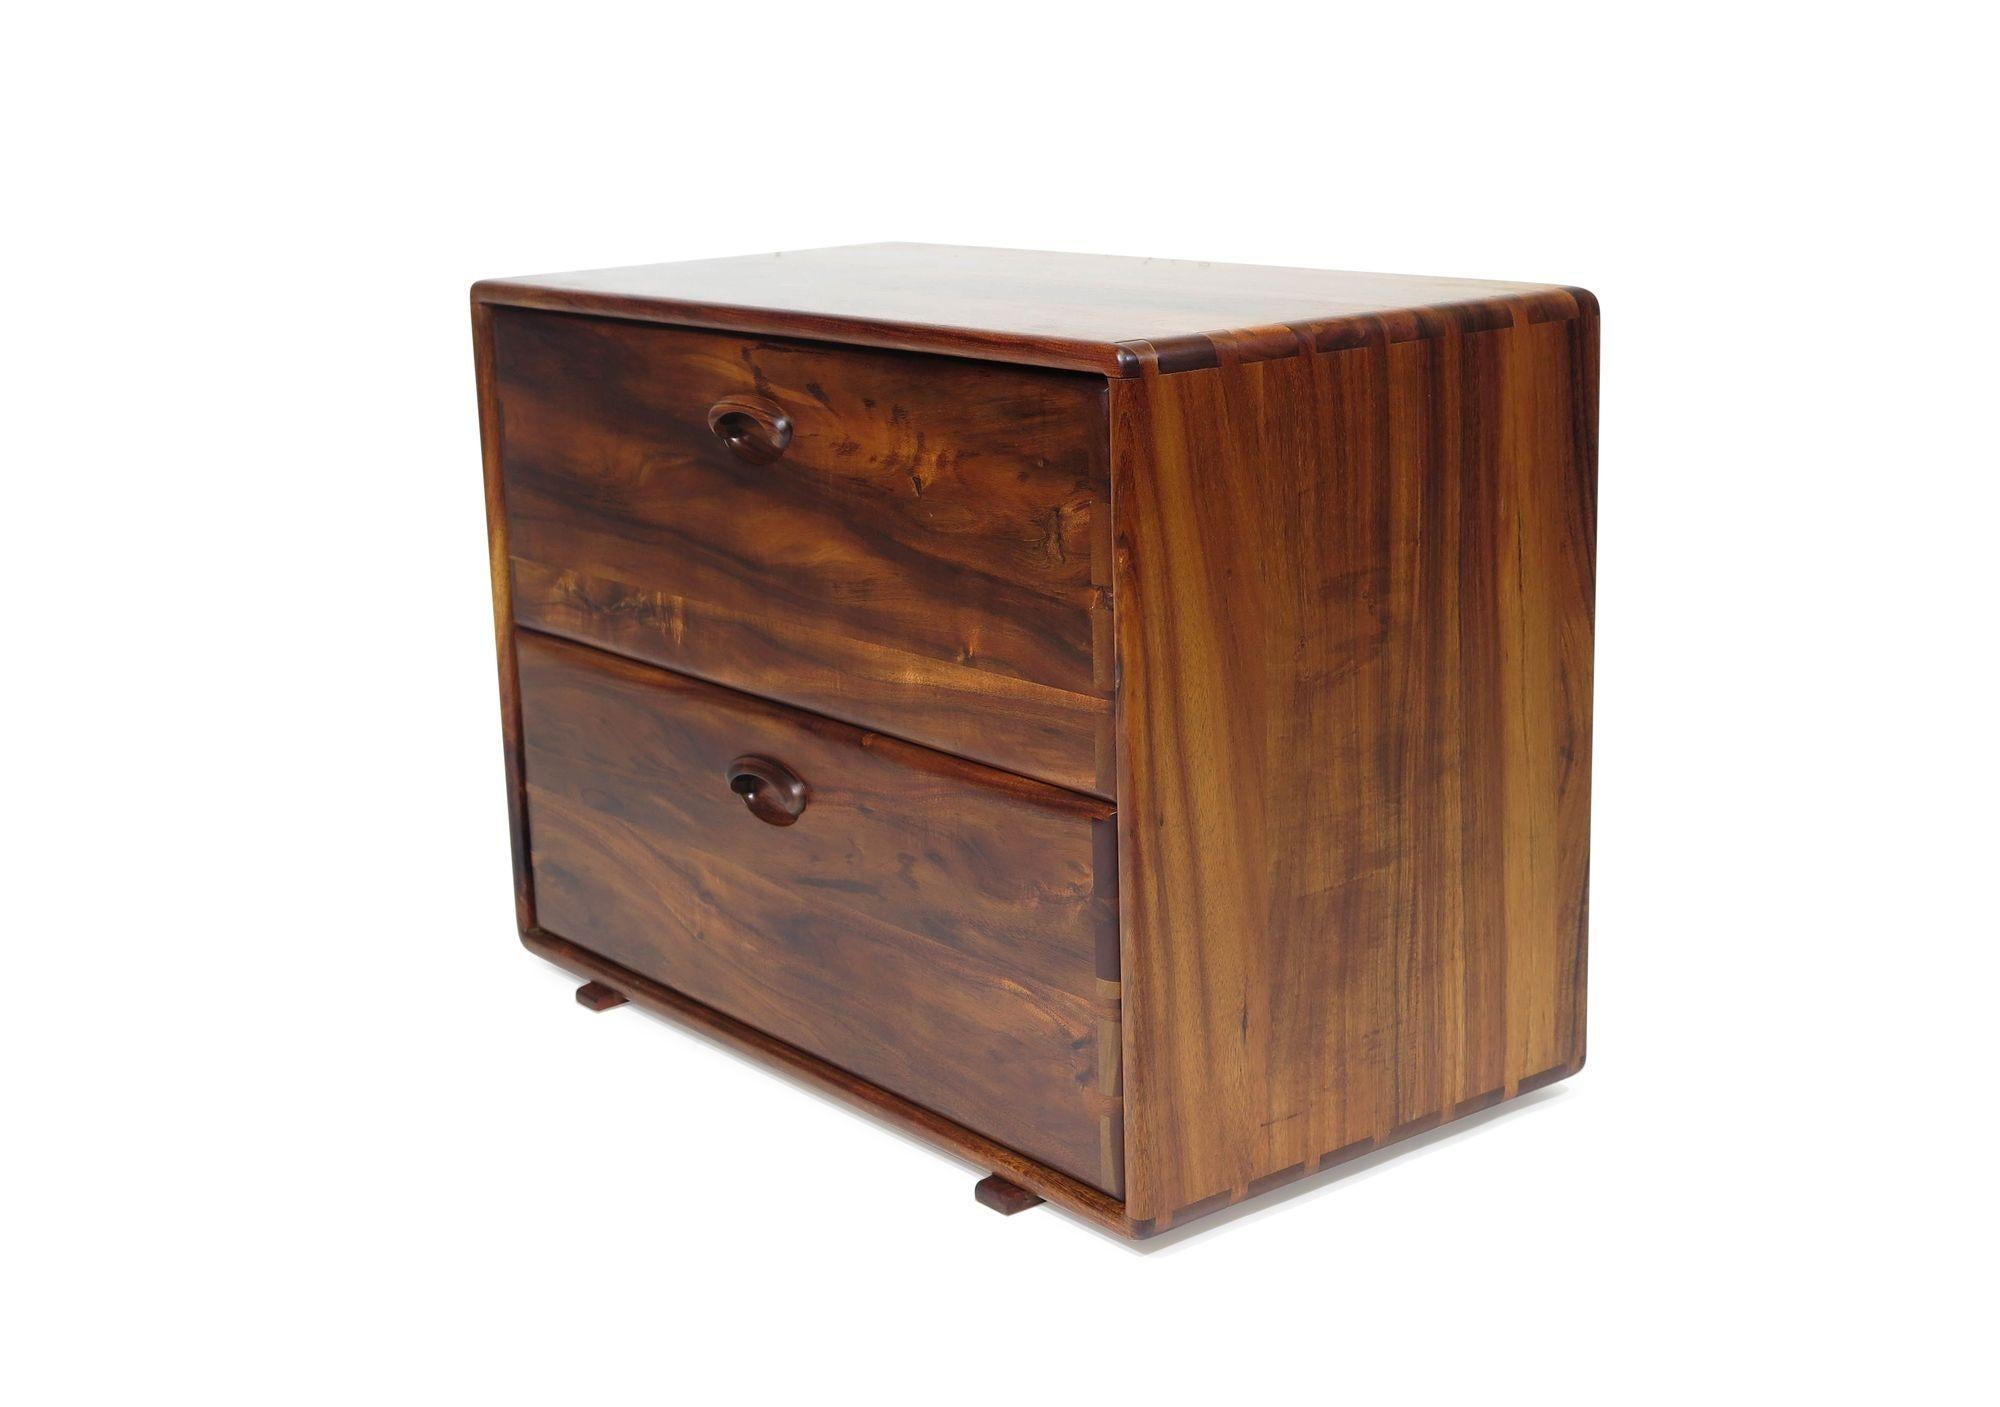 Wood Koa California Studio Craft Filing Cabinet #1 For Sale